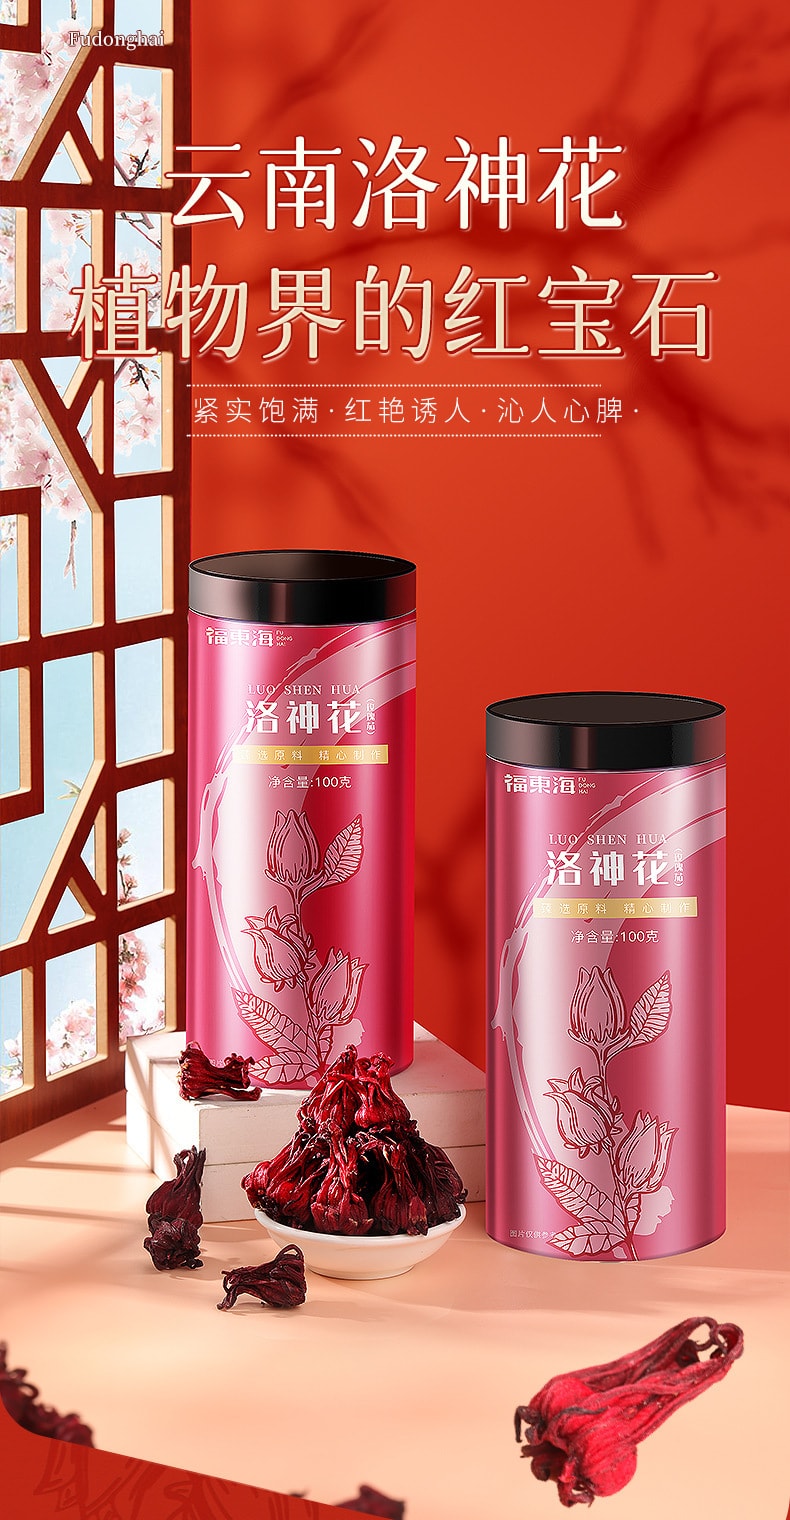 Roshenhua Beauty Nourishing Beauty 100g/ Jar (Goddess Nourishing Beauty Tea)